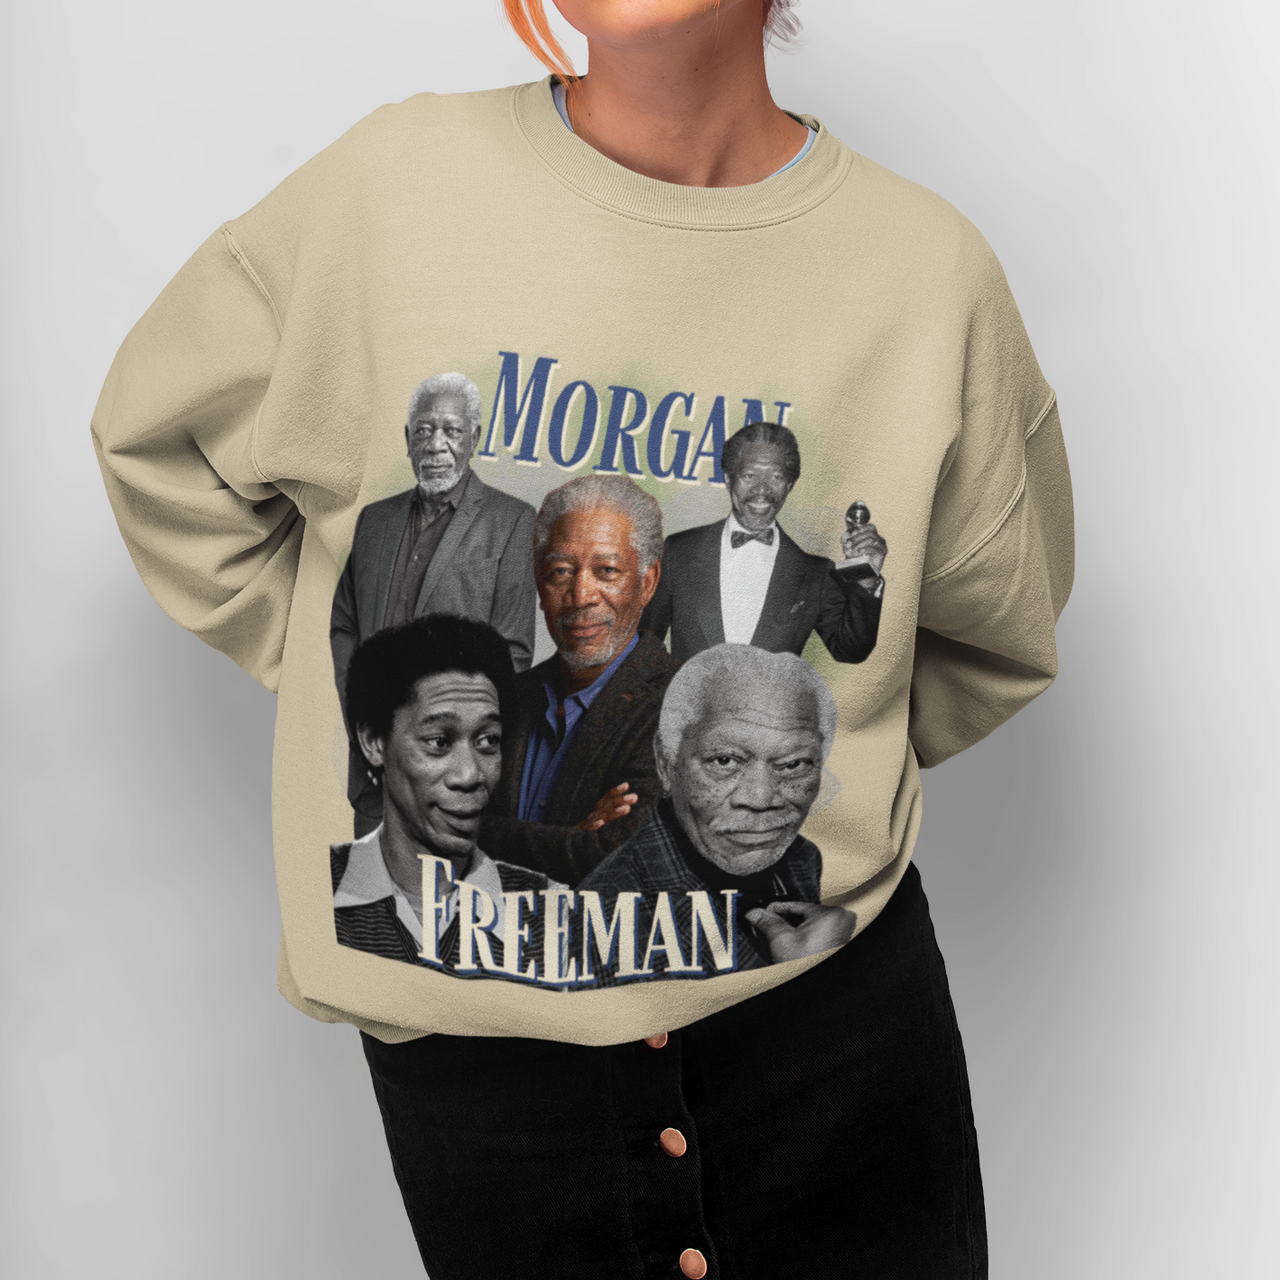 Morgan Freeman Sweatshirt, 90s Rap Style Bootleg Driving Miss Daisy Pullover Crewneck, Million Dollar Baby Movie Fan Gift